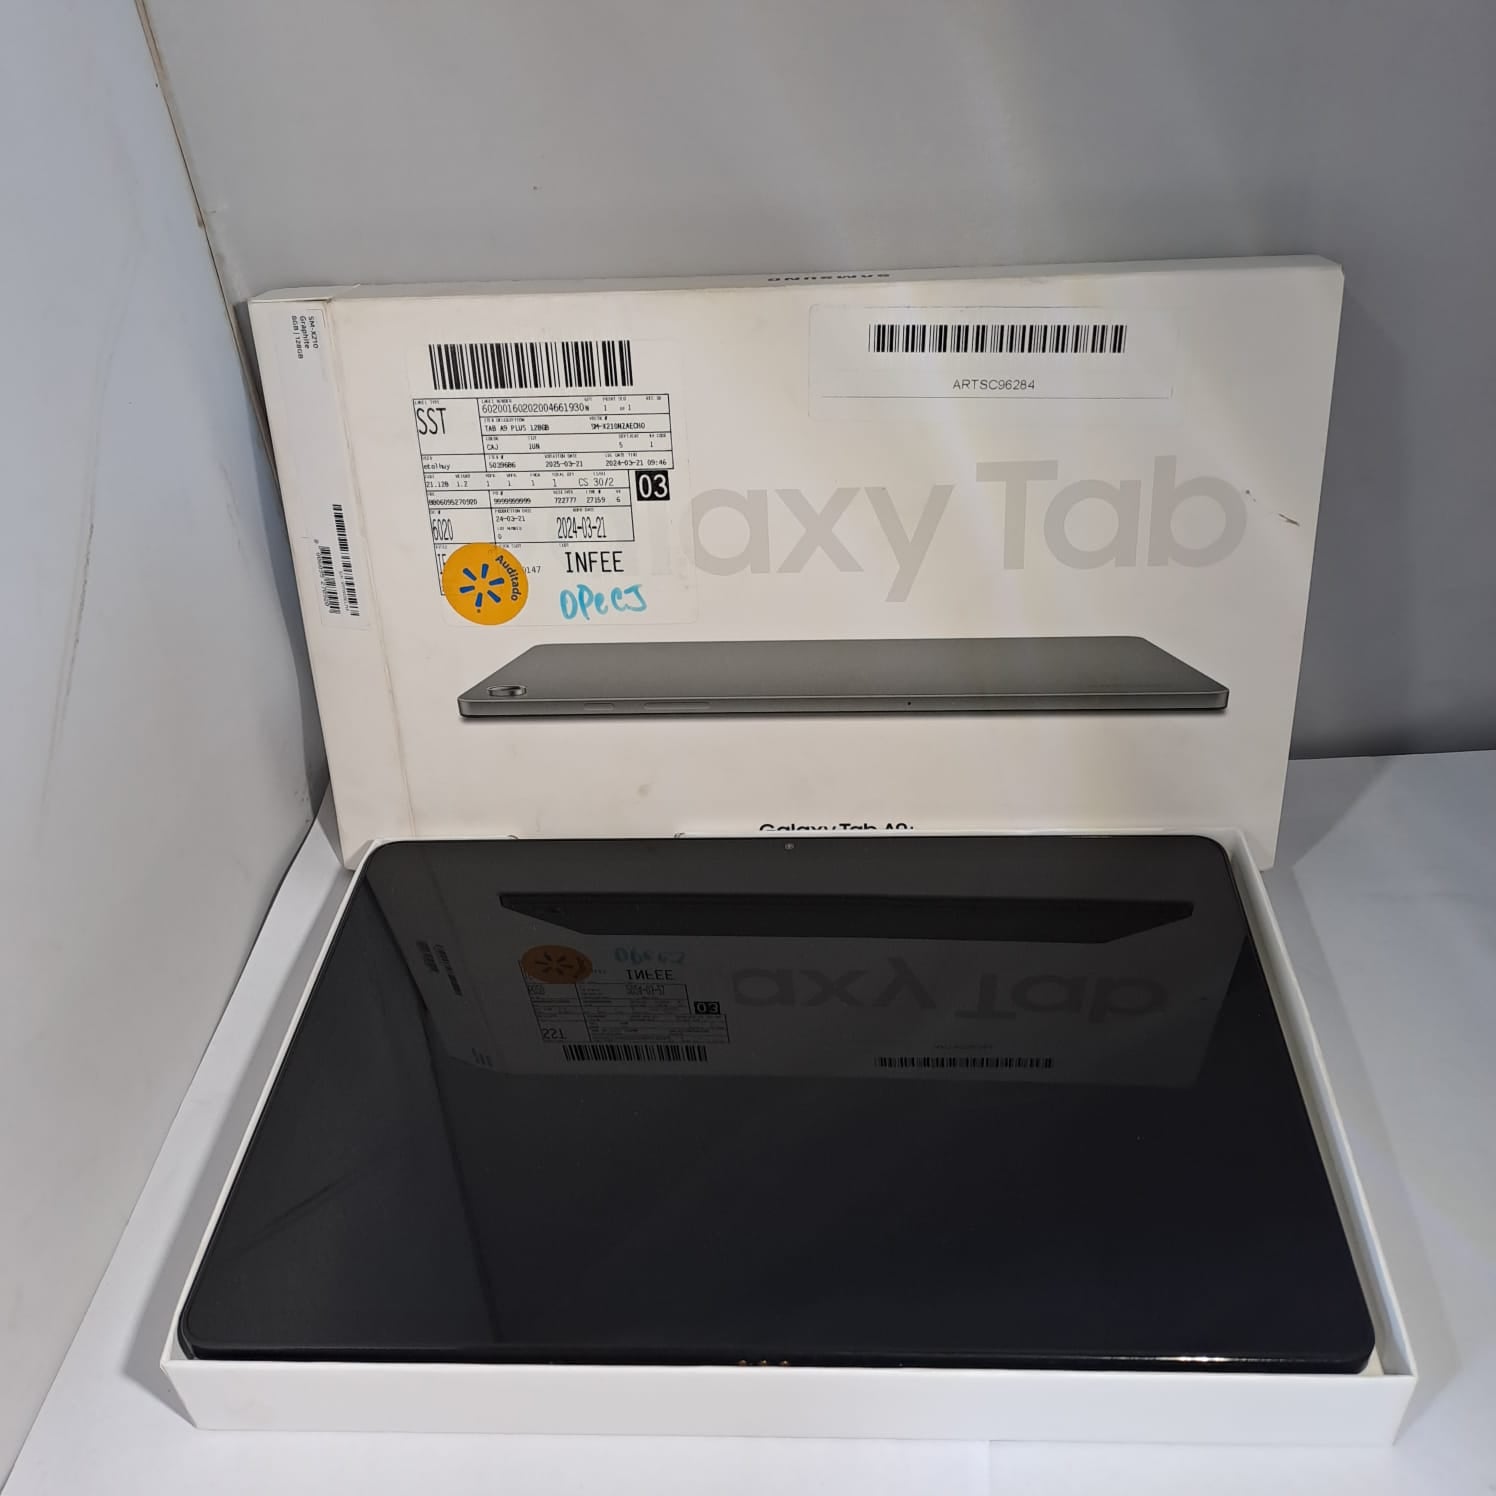 Tablet 128 Gb Samsung Galaxy Tab A9+ Negro [Openbox]